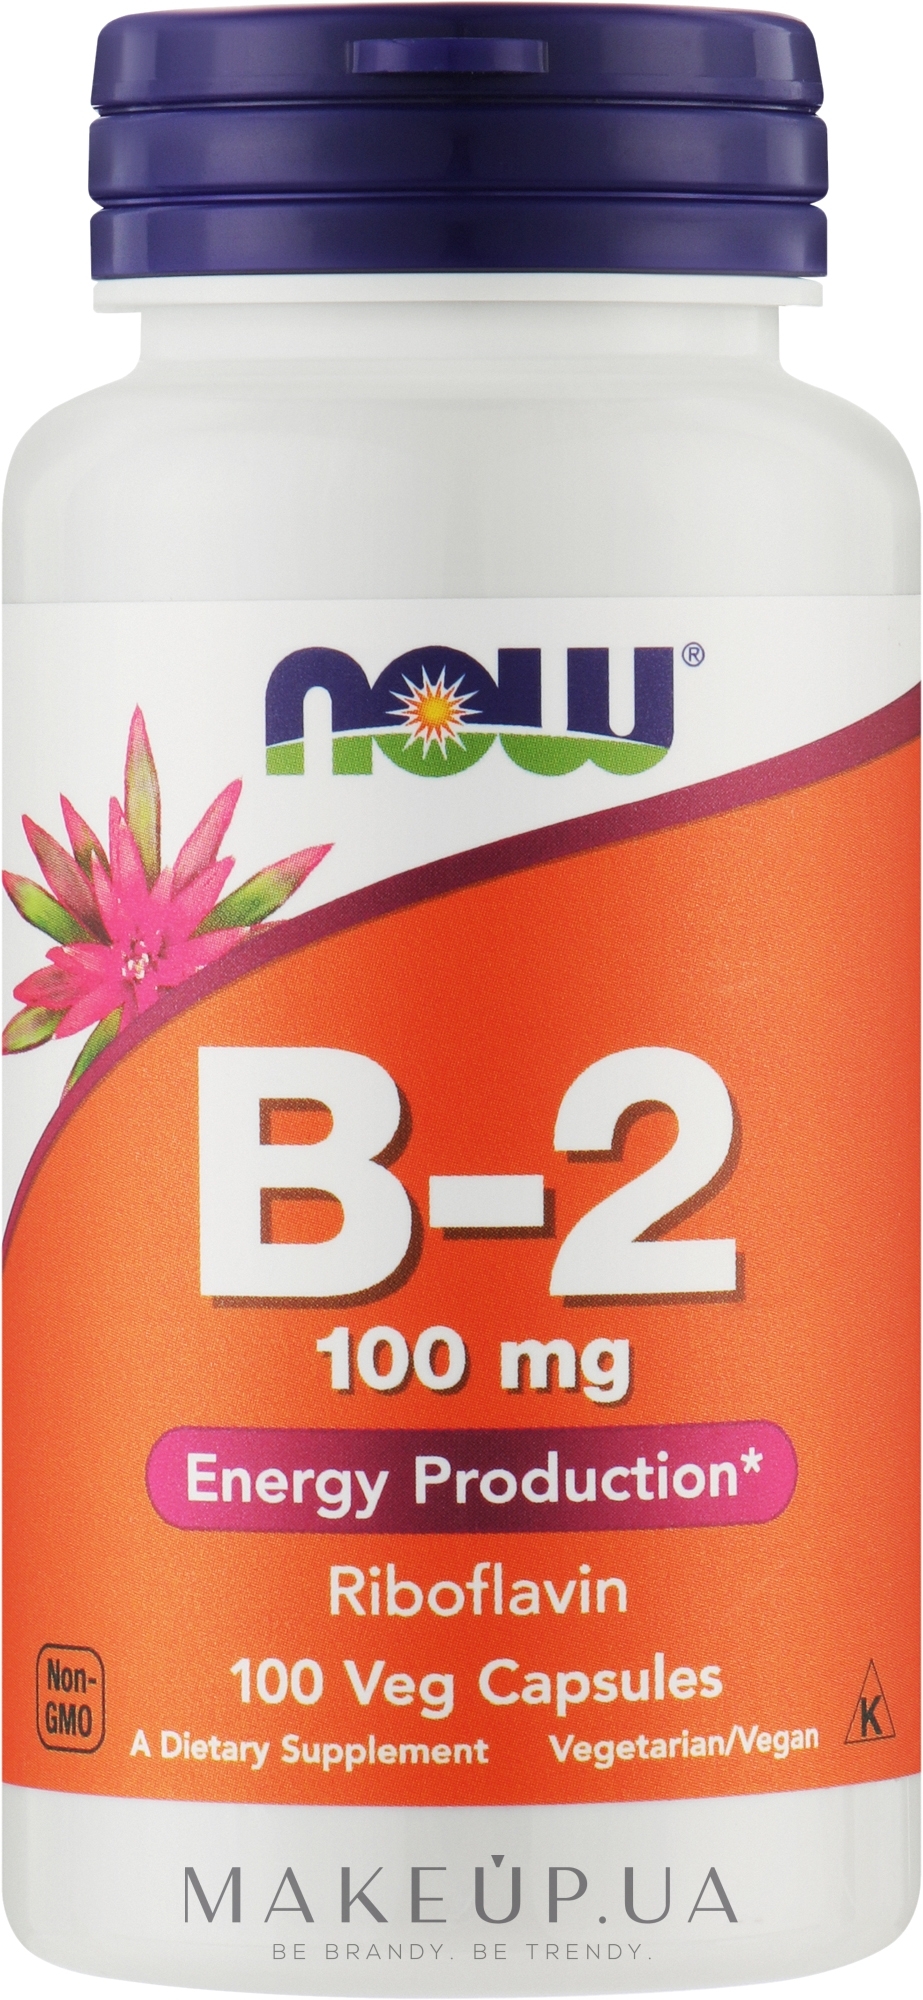 Вітамін B-2 рибофлавін, 100 мг - Now Foods Vitamin B-2 Riboflavin 100mg Capsules — фото 100шт